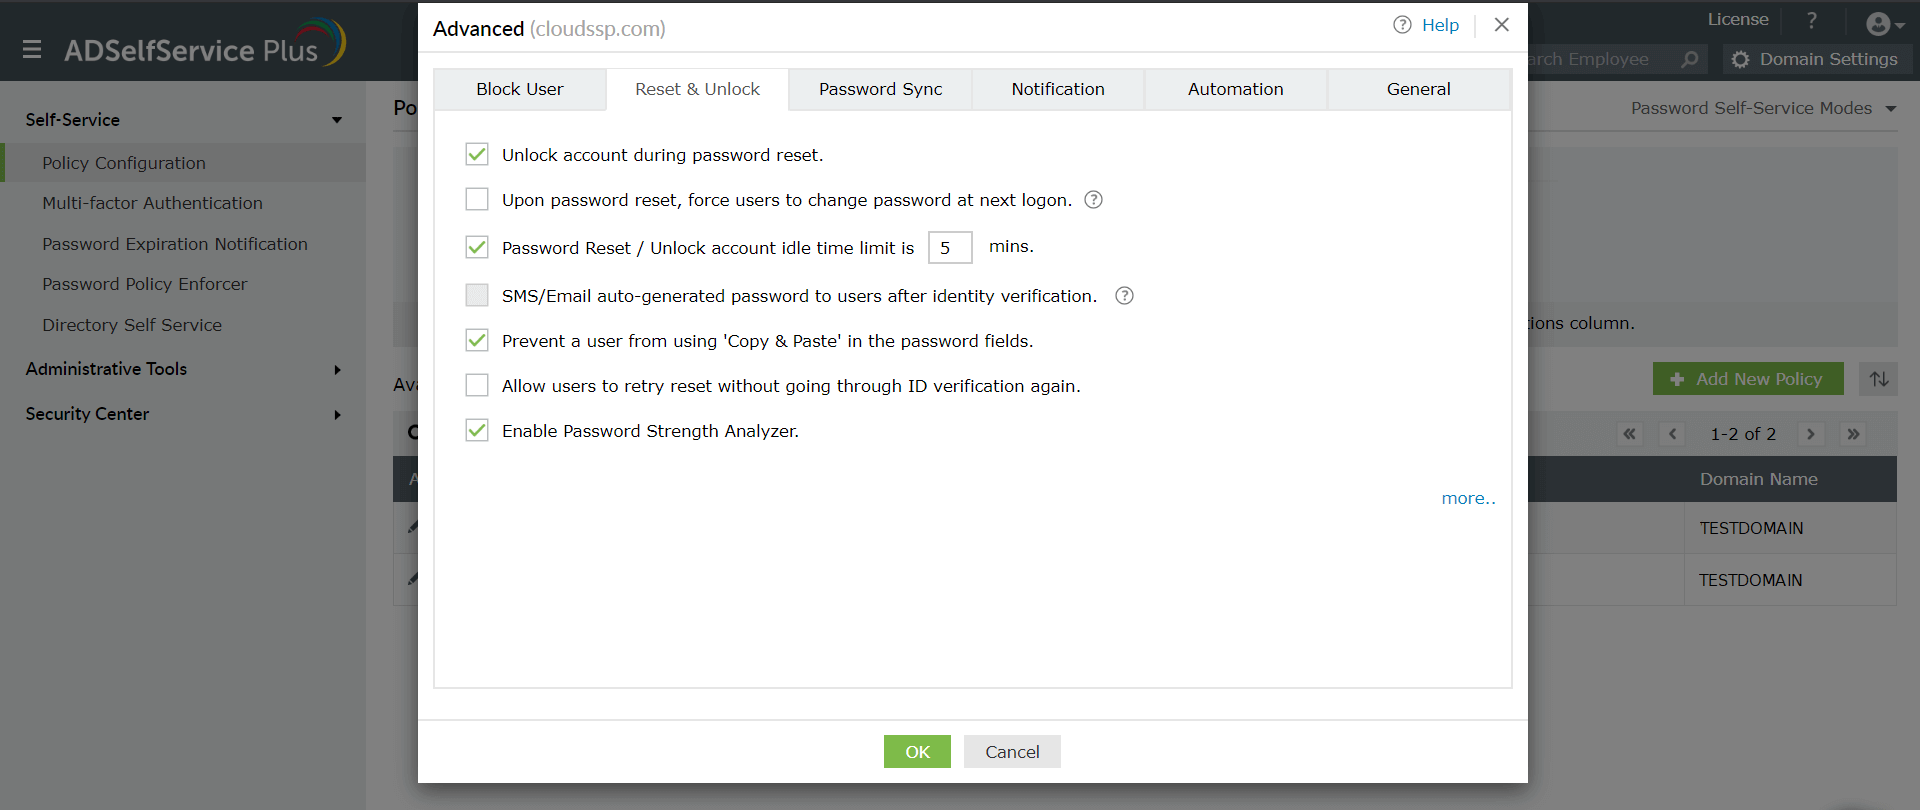 Screenshot ADSelfService Plus: Advanced Password Reset Policy